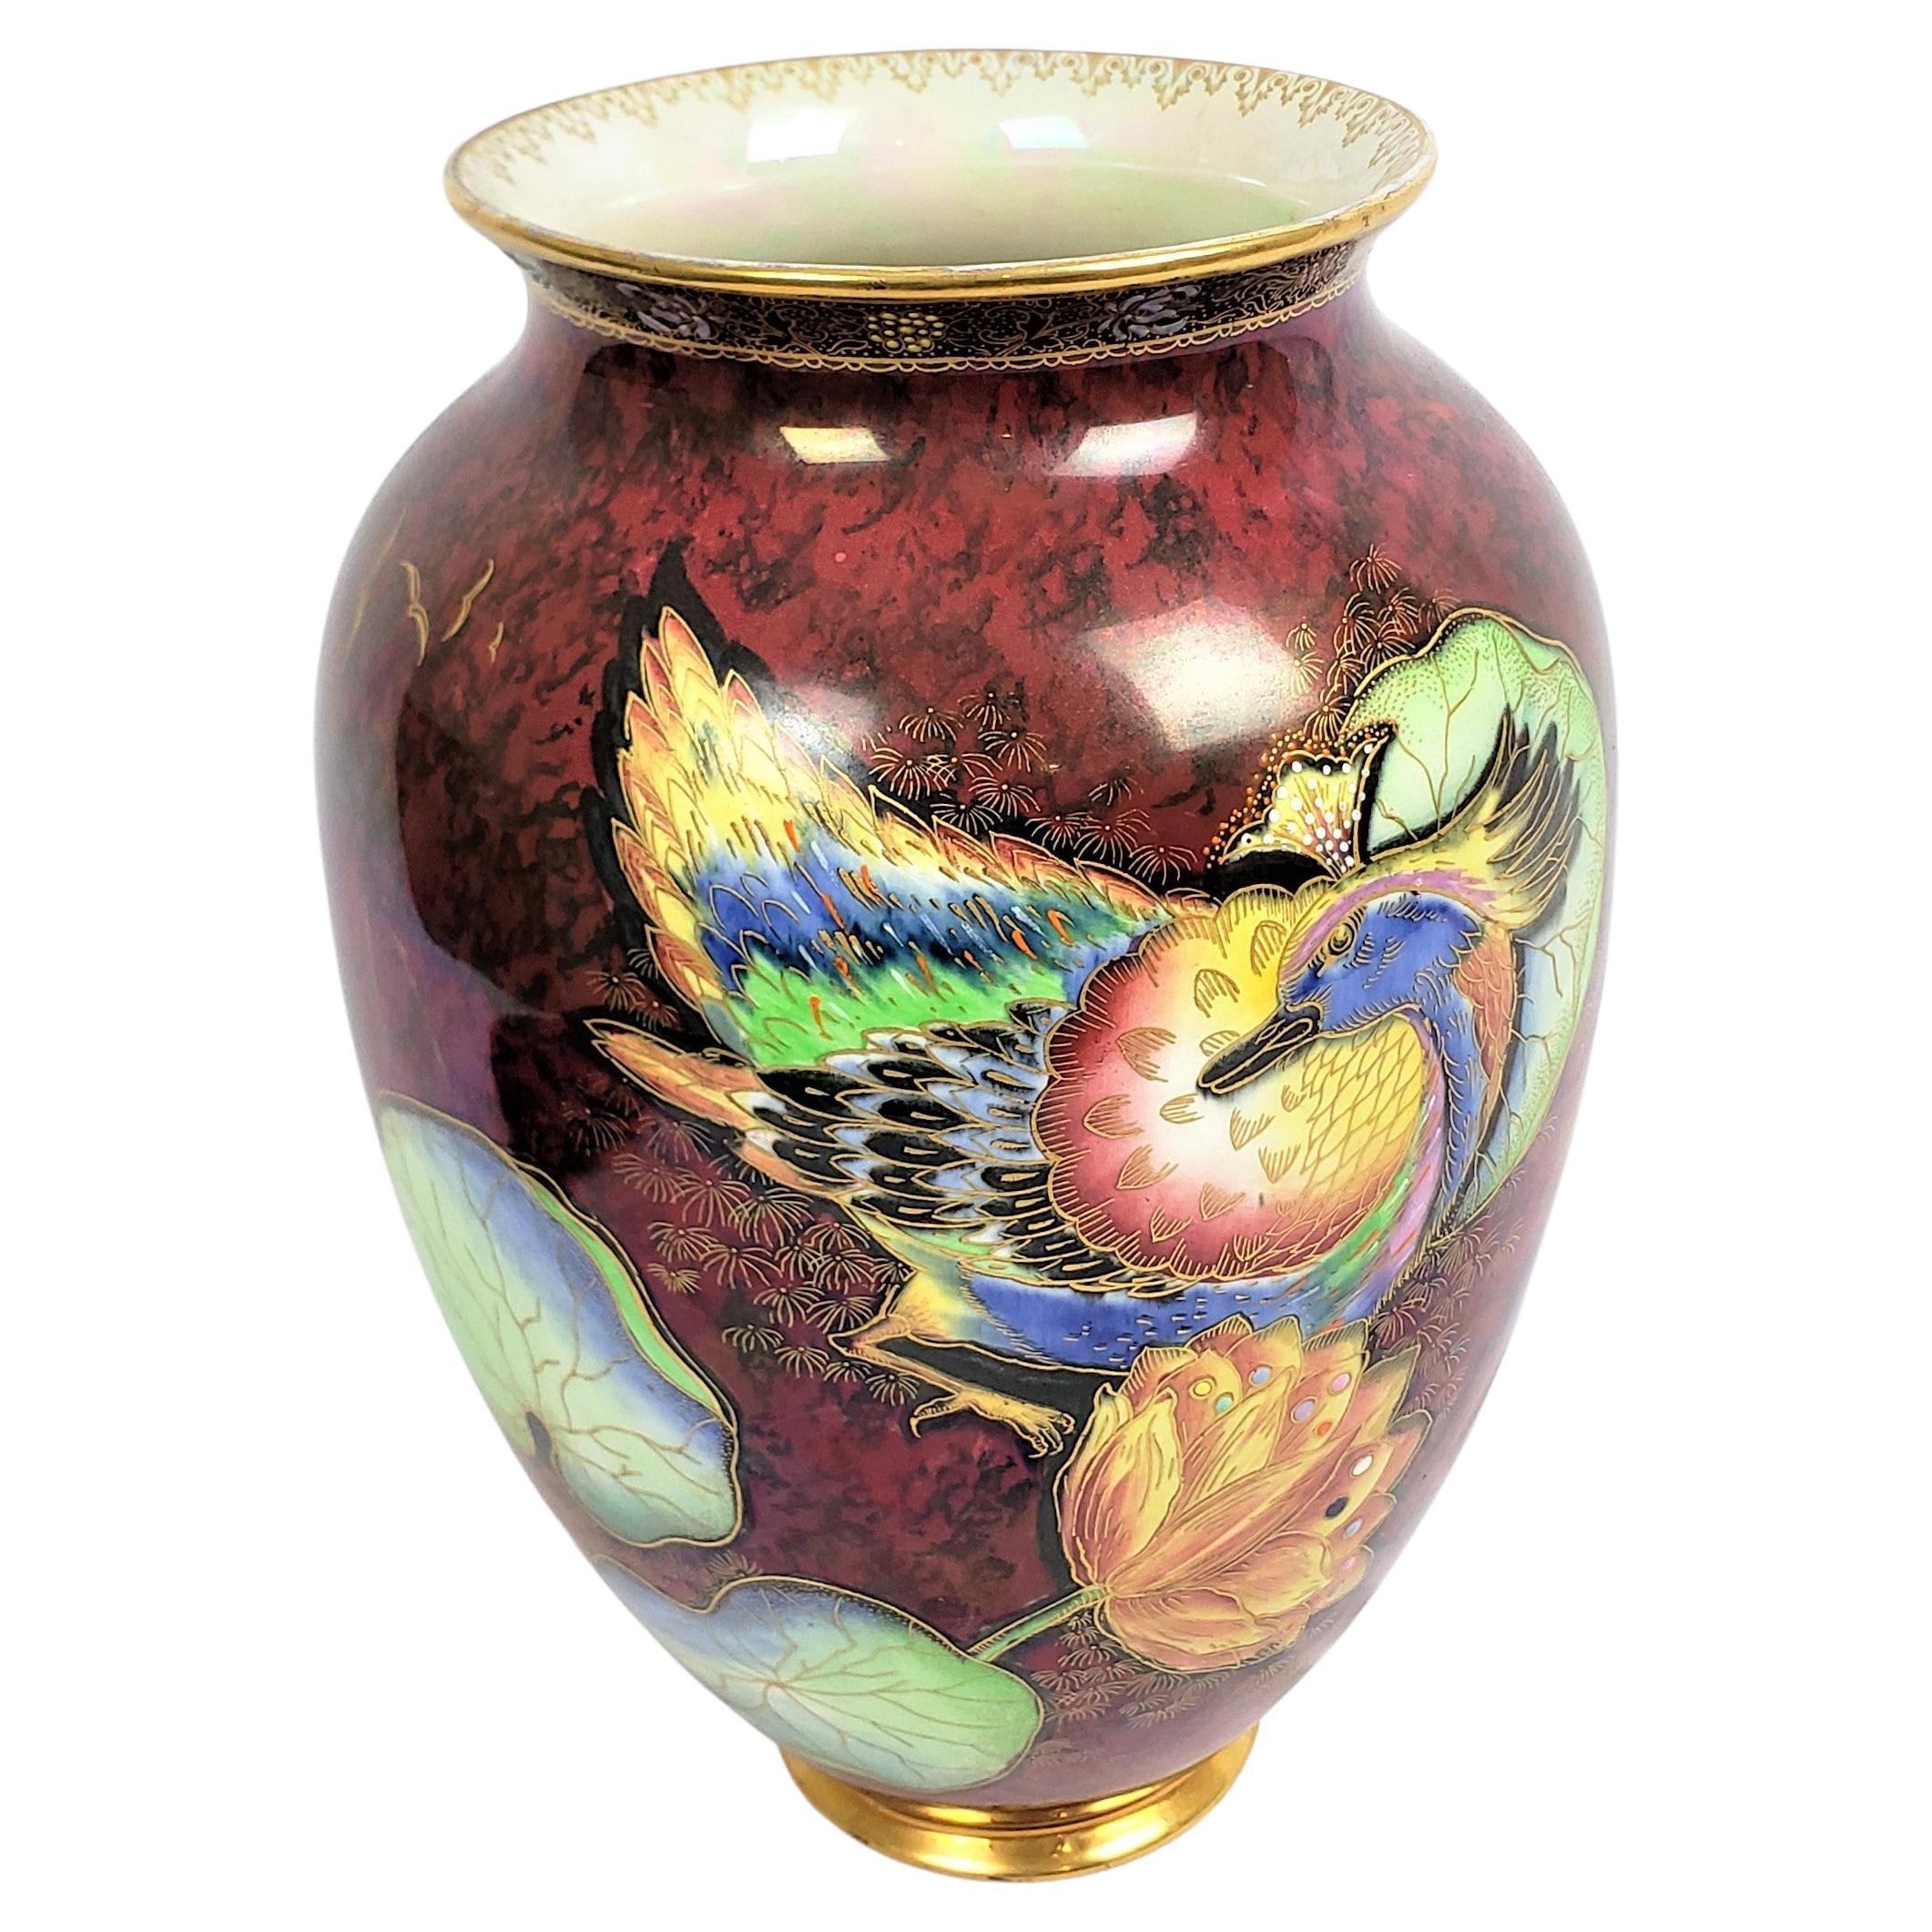 Antique Art Deco Era Carlton Ware Vase with Asian Inspired Decoration